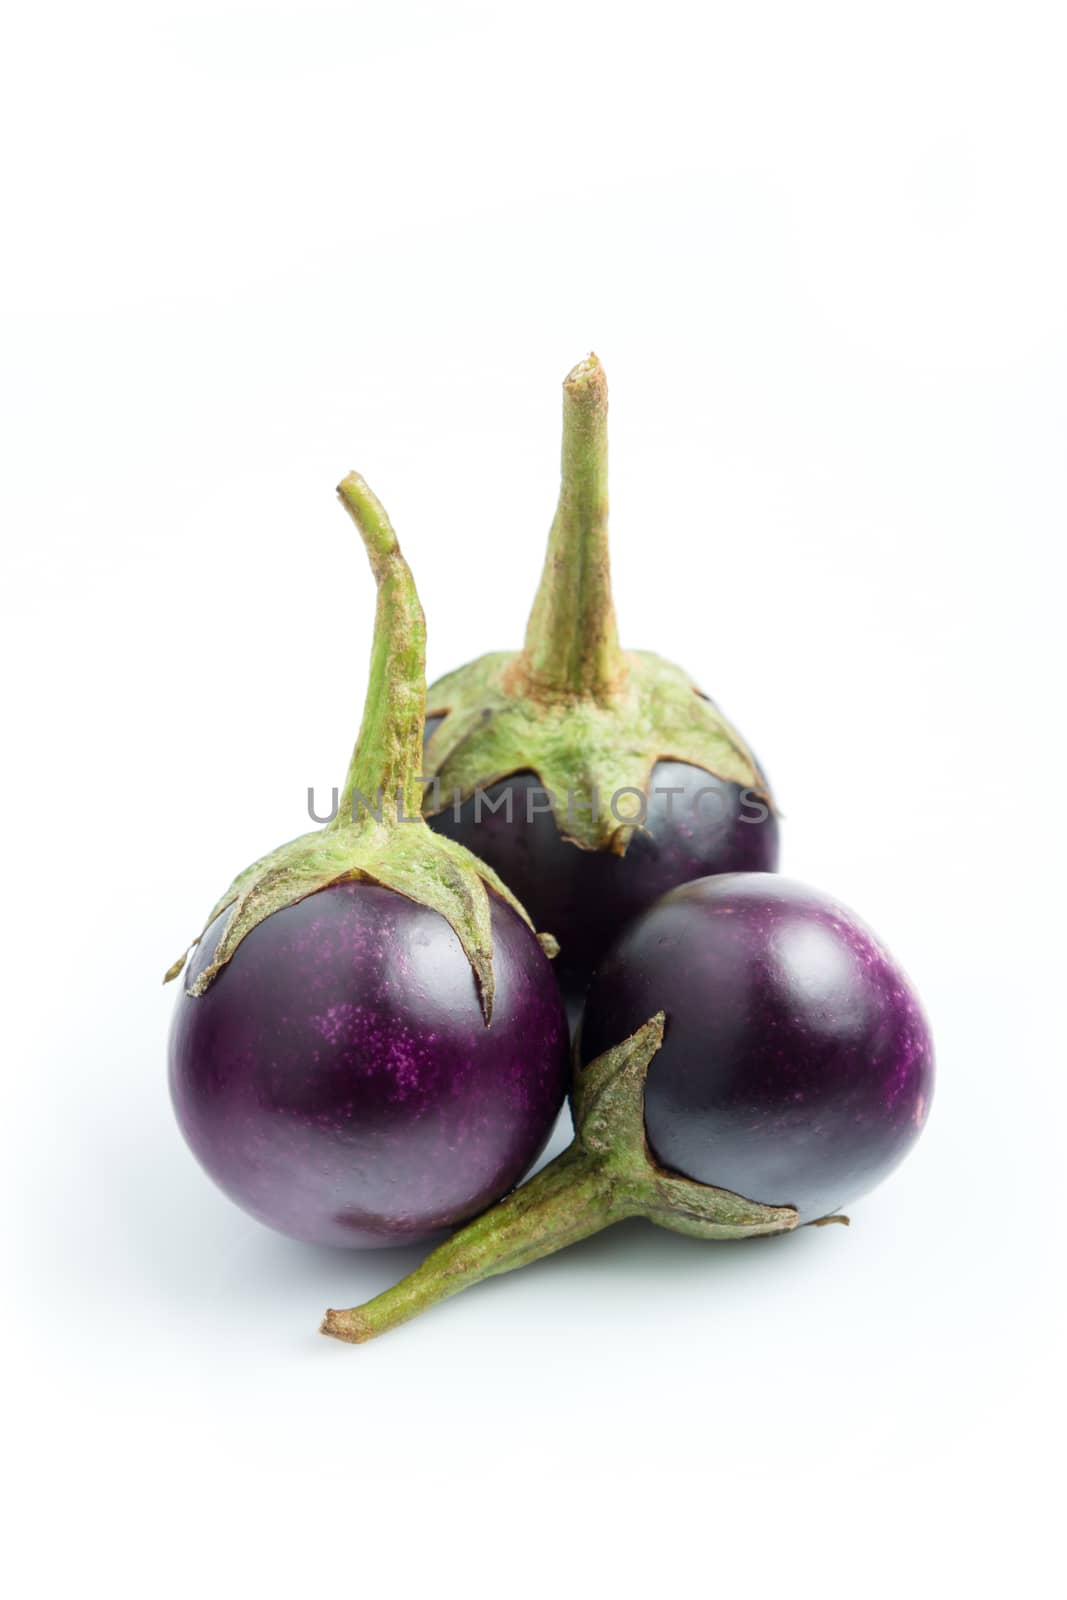 Purple Brinjal, eggplant isolated on white background